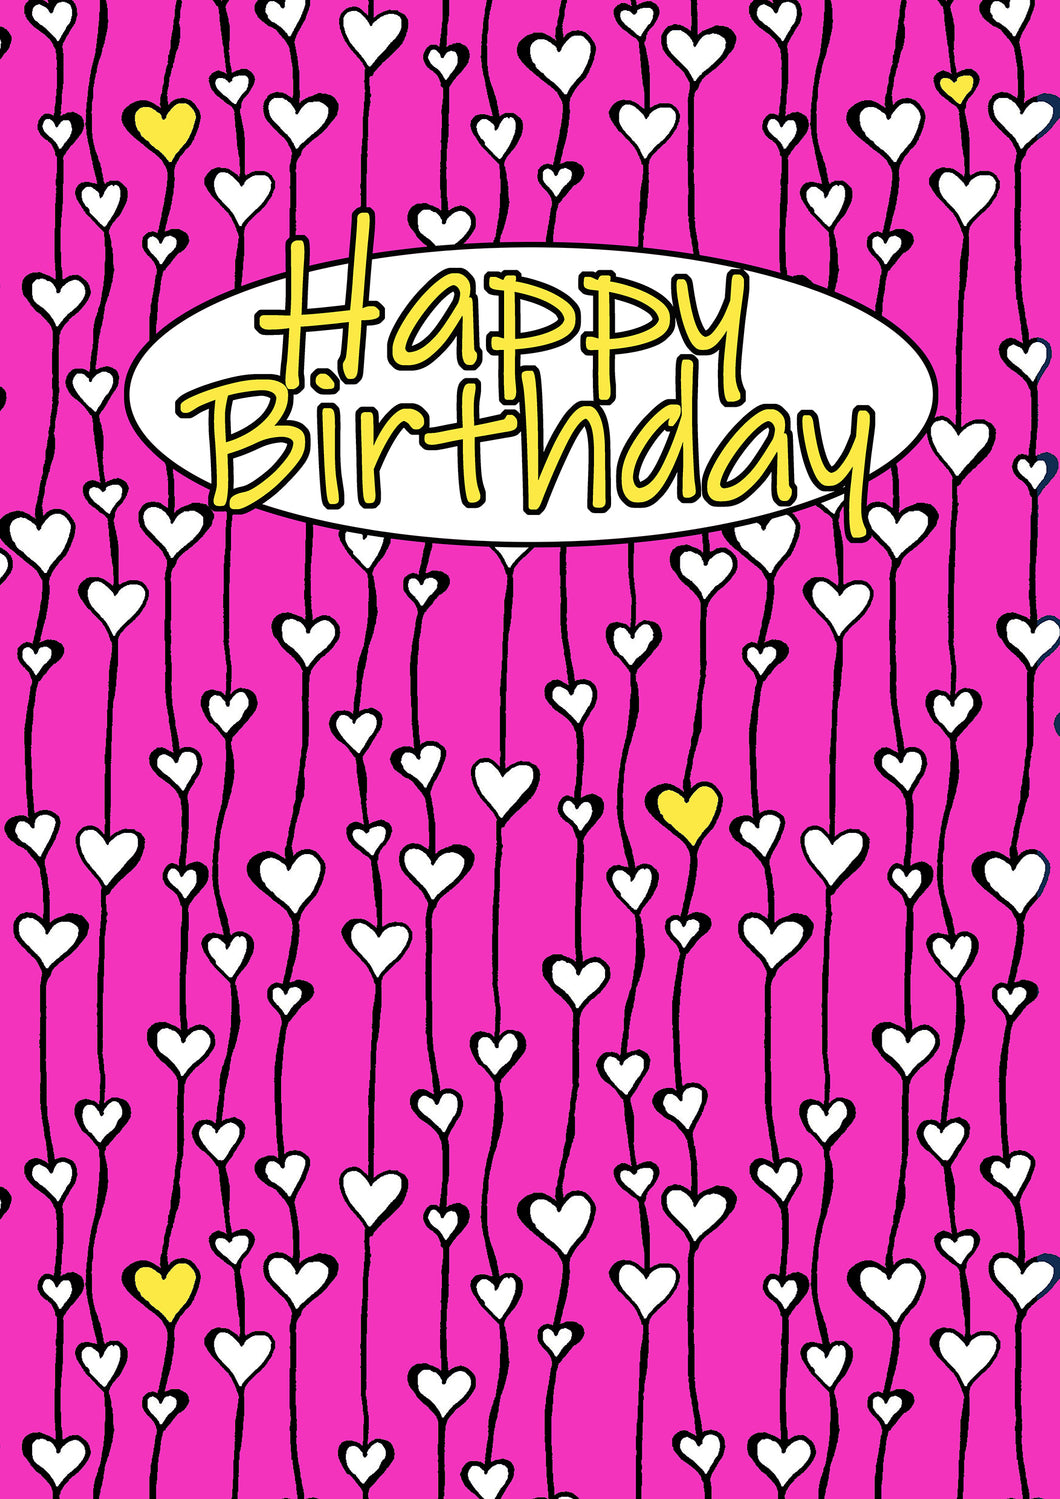 Happy Birthday Card - pink hearts